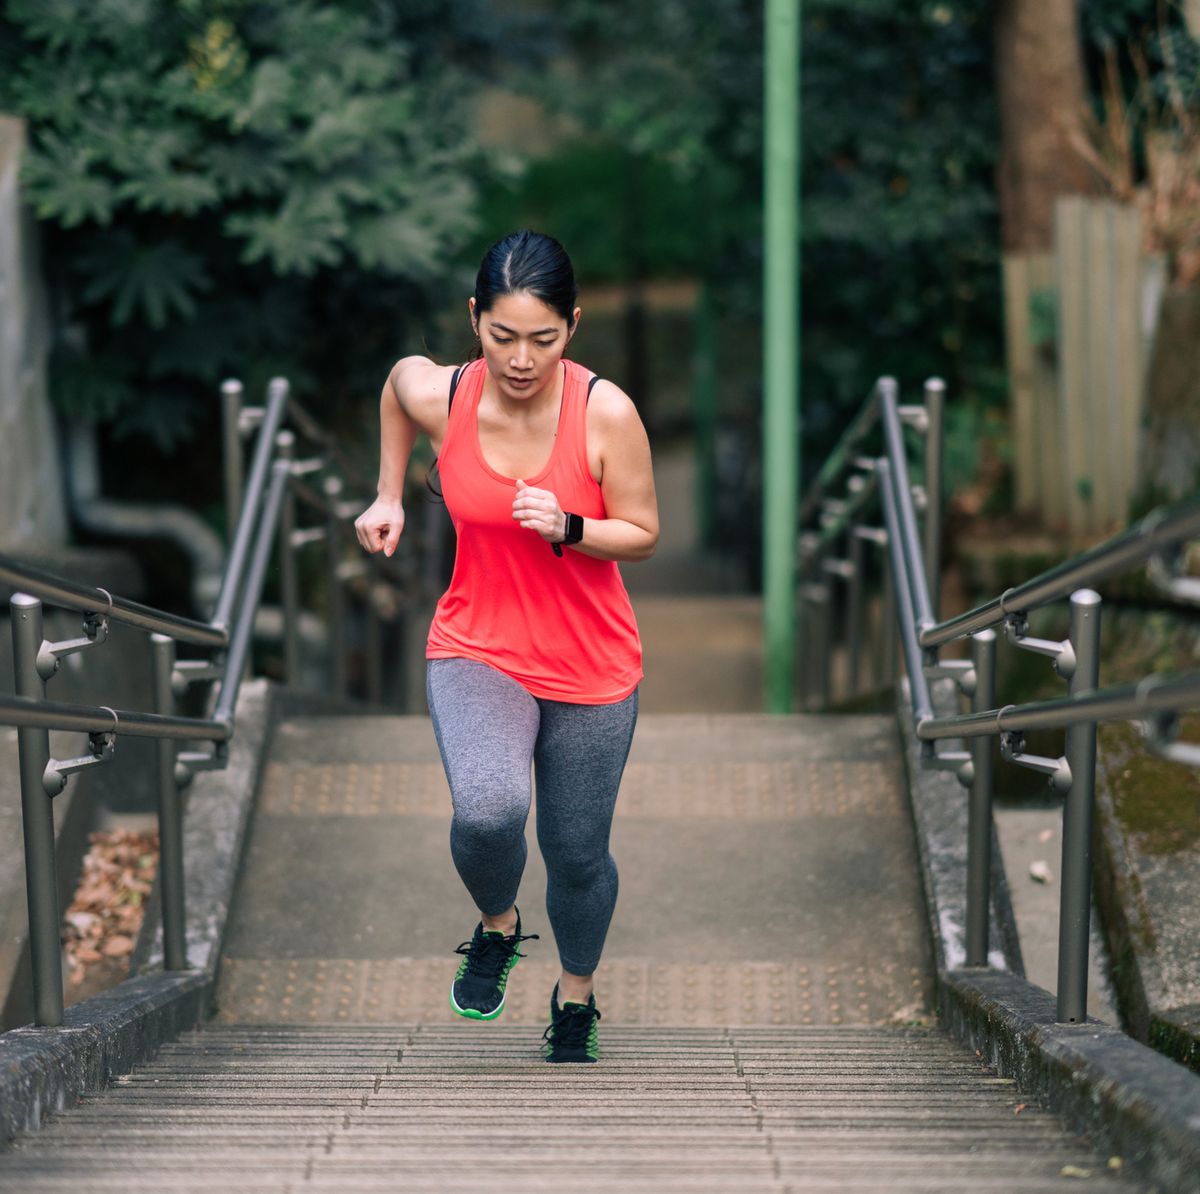 Running Woman Jogging Image & Photo (Free Trial), jogging